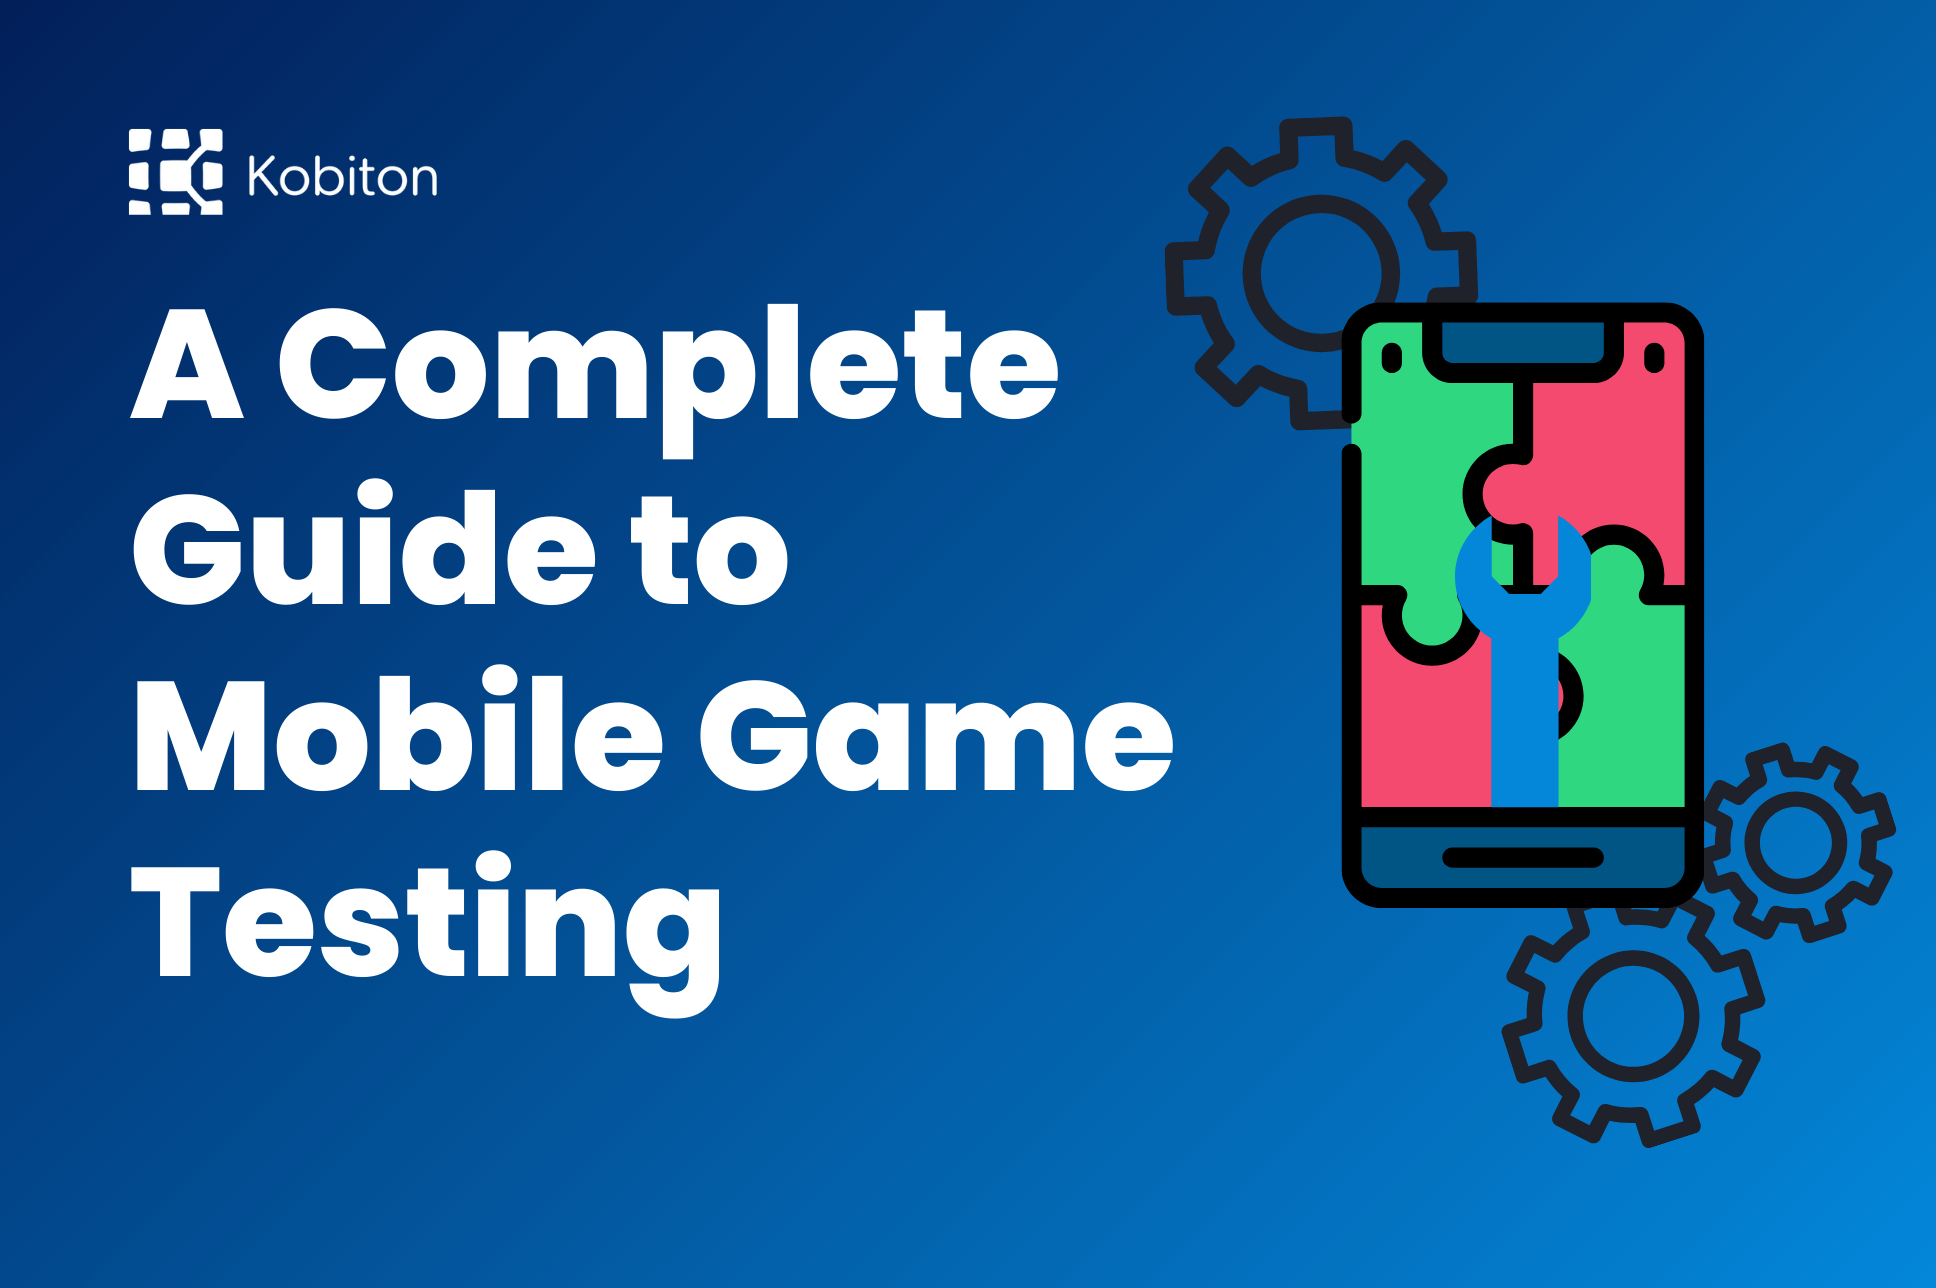 Mobile game testing